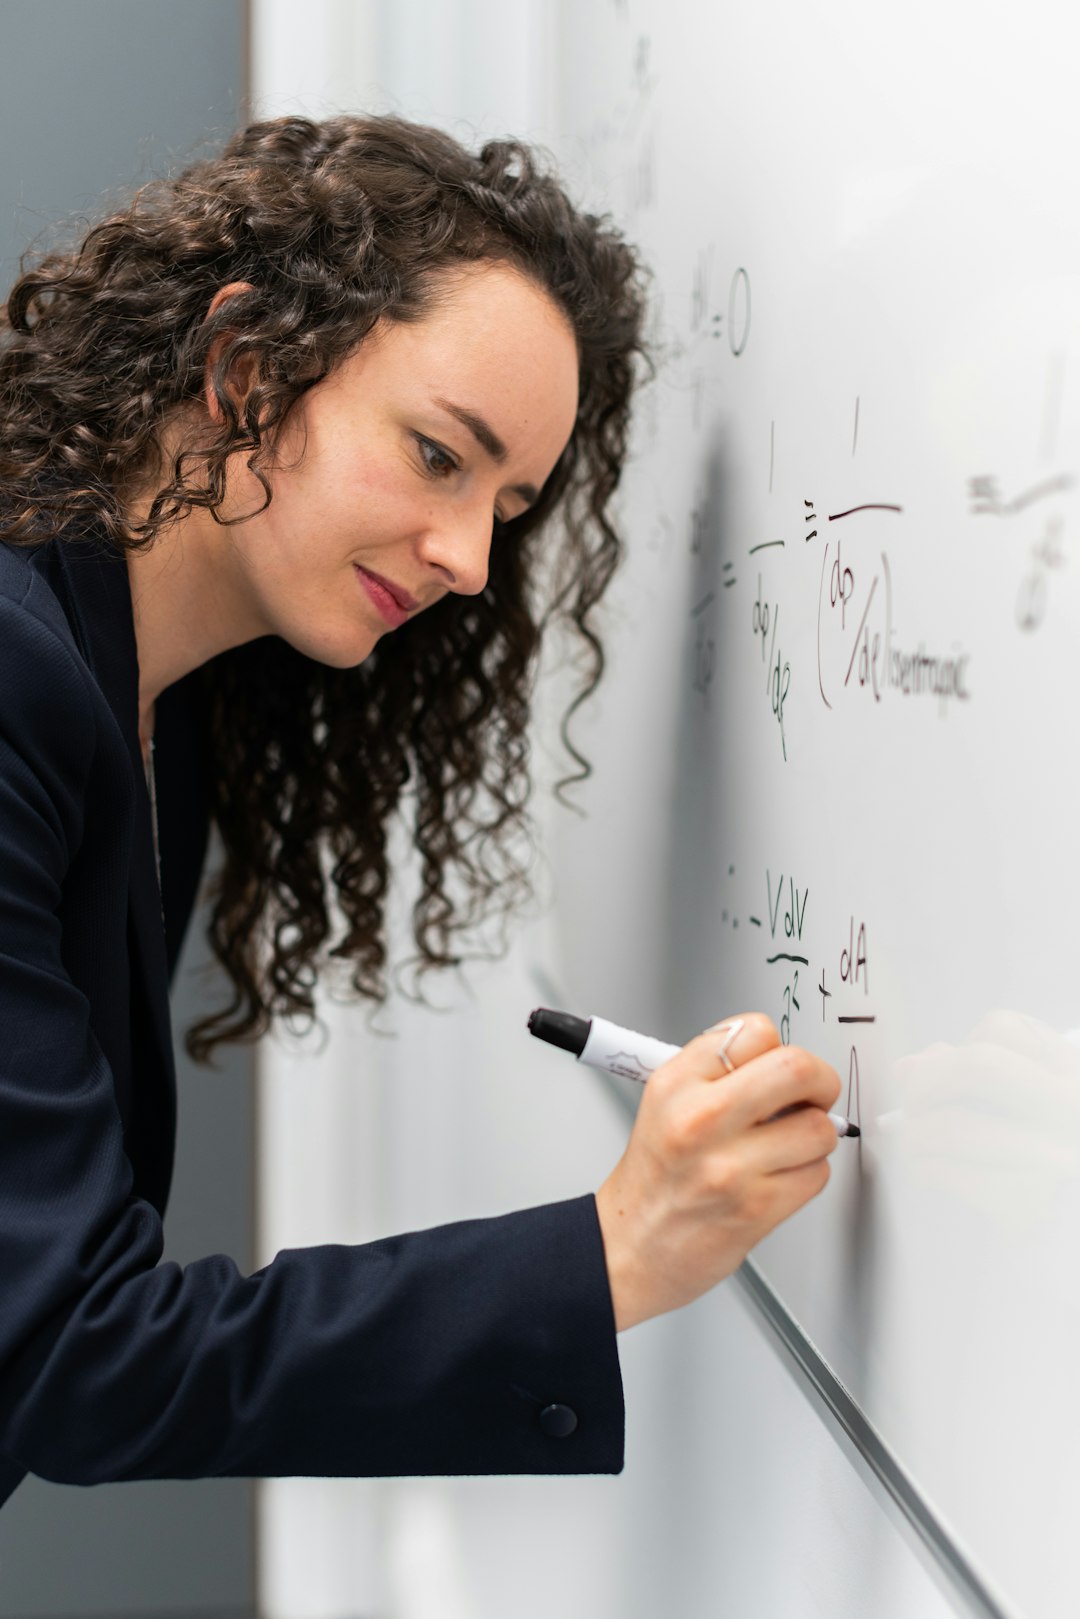 Female aerospace engineer working on equations